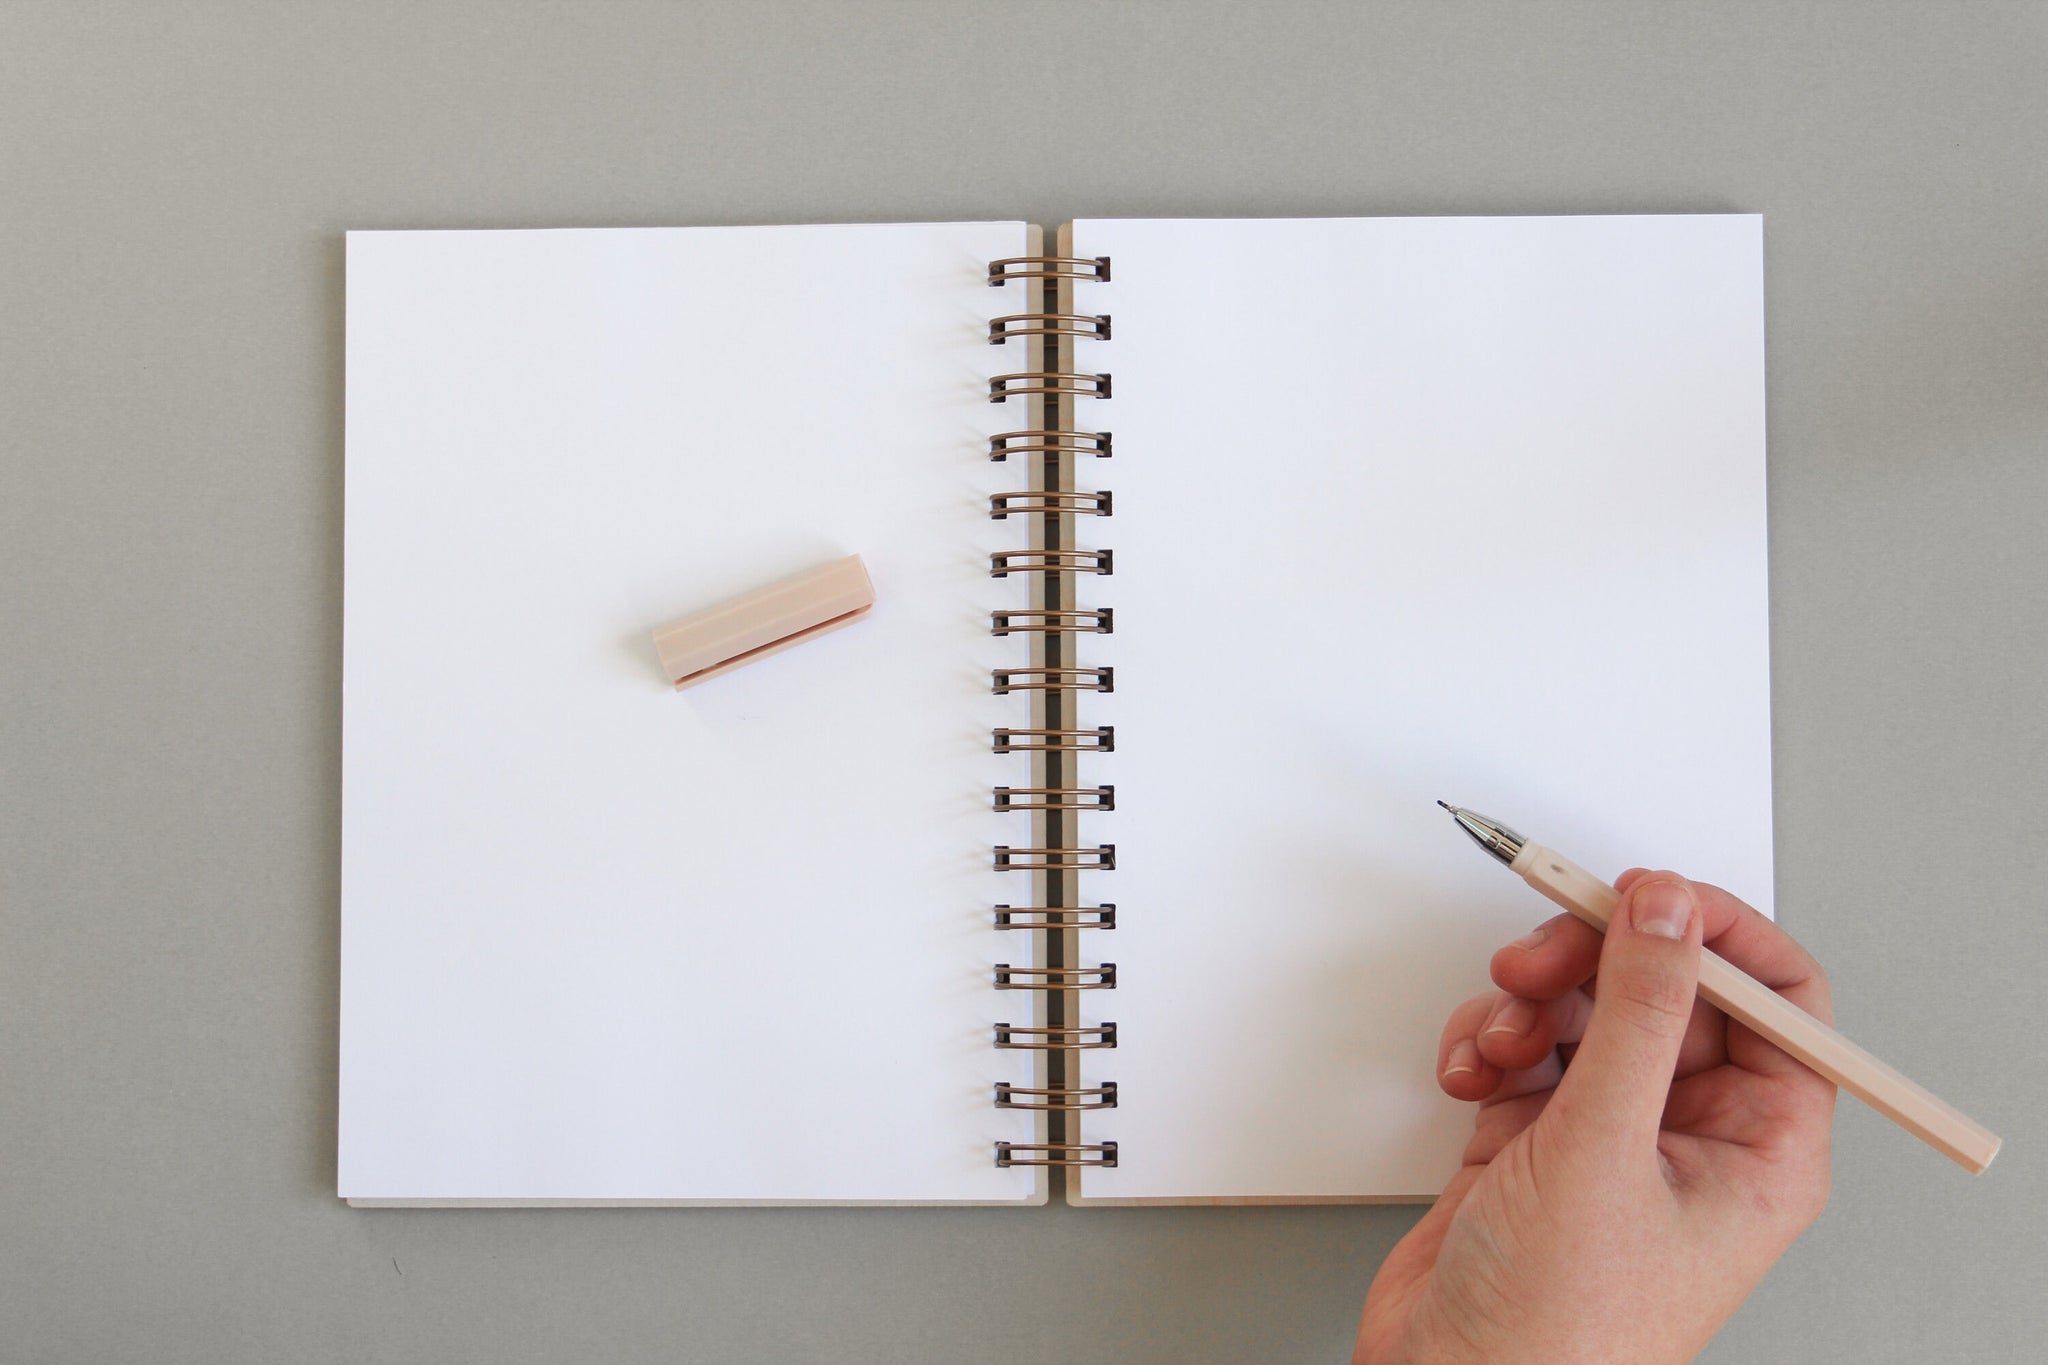 Personalised Journal, Wooden Notebook